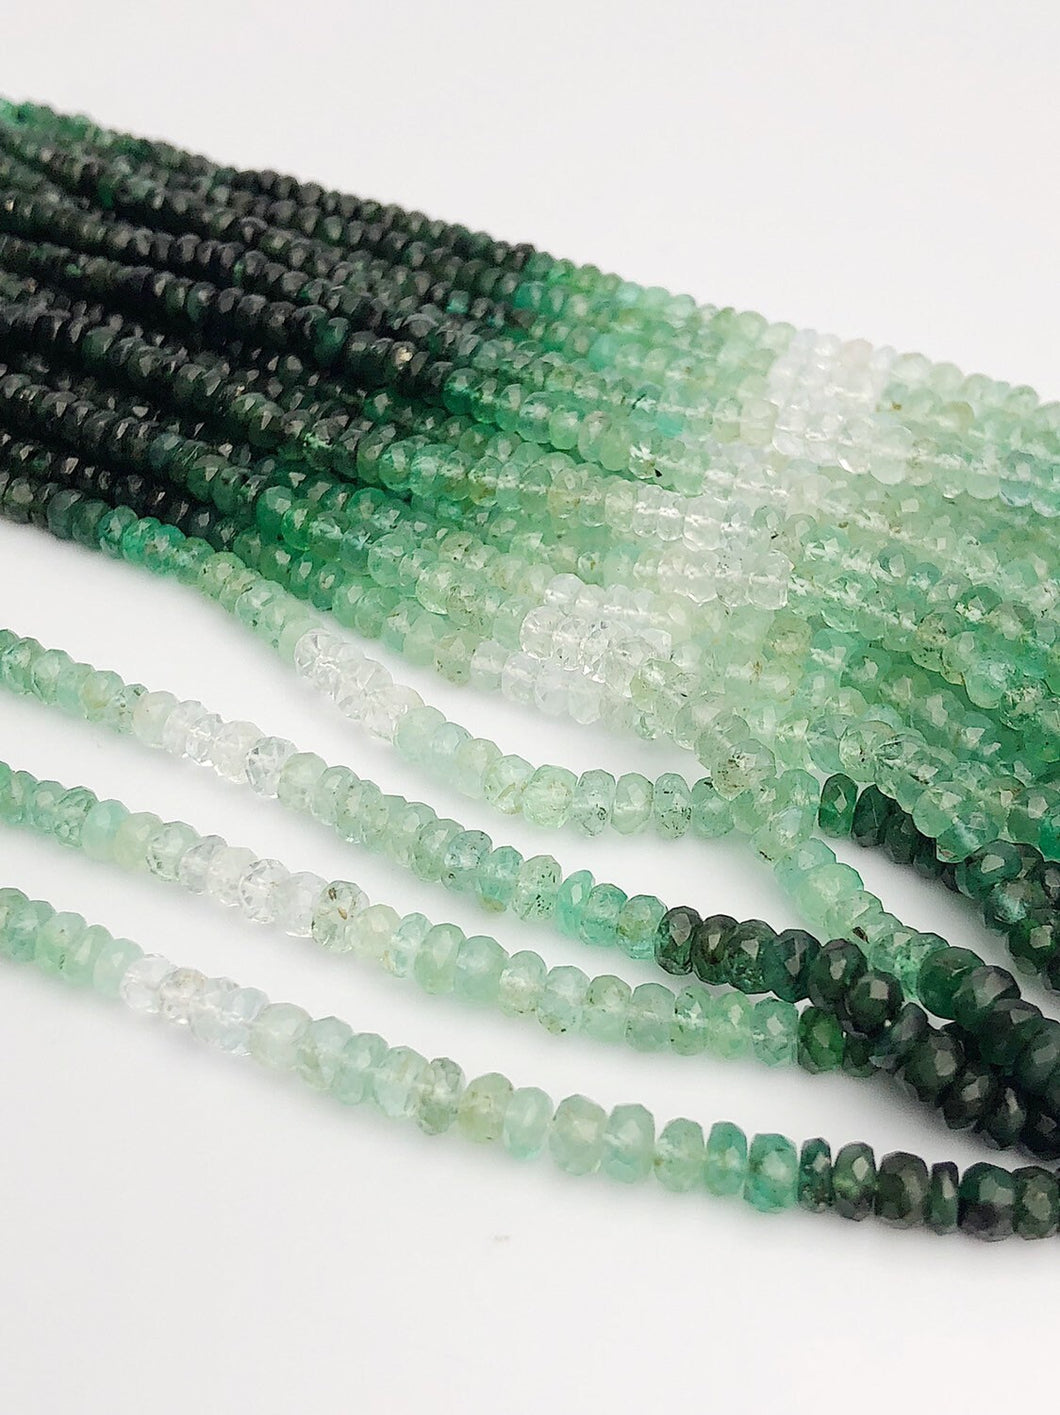 HALF OFF SALE - Shaded Emerald Gemstone Beads, Full Strand, Semi Precious Gemstone, 16